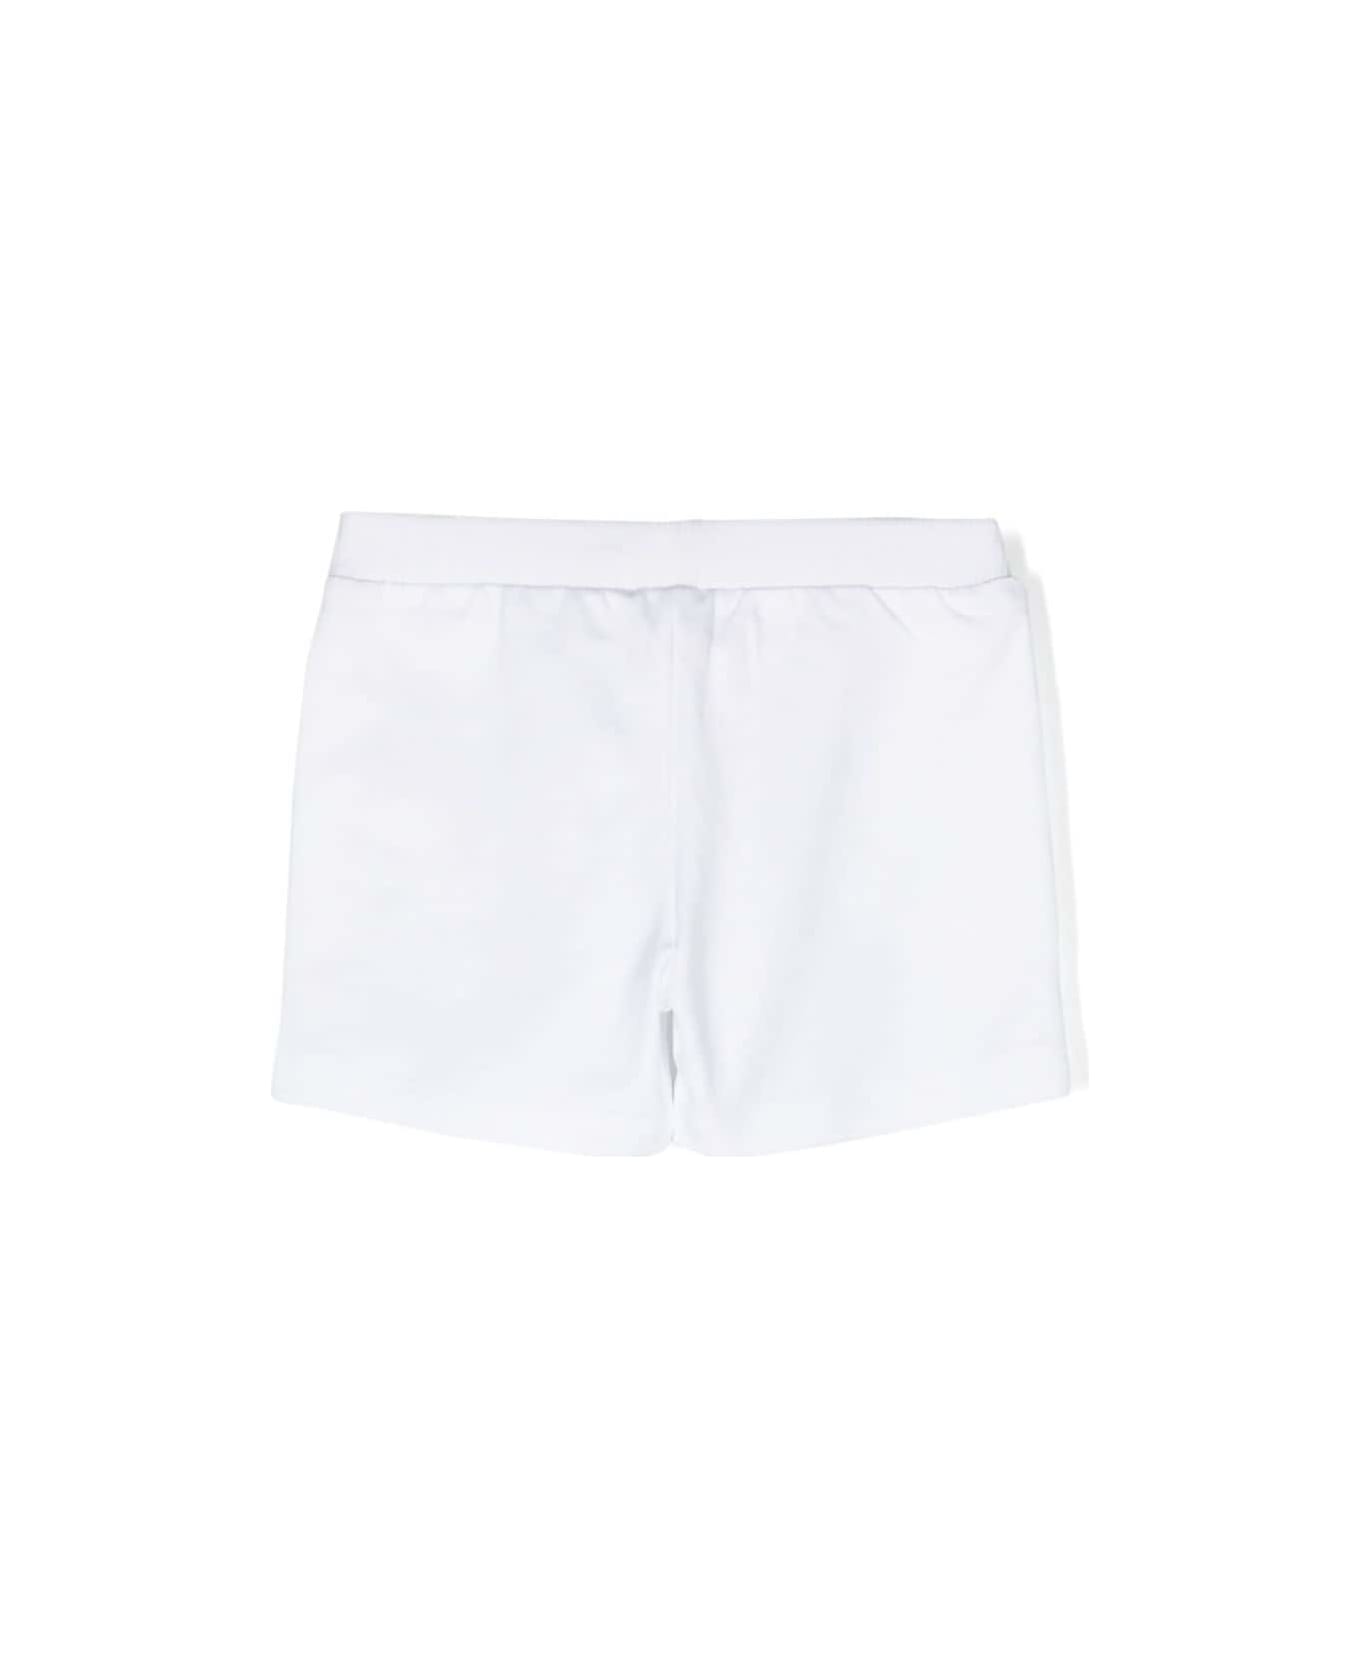 Moschino Shorts Con Stampa Teddy Bear - White